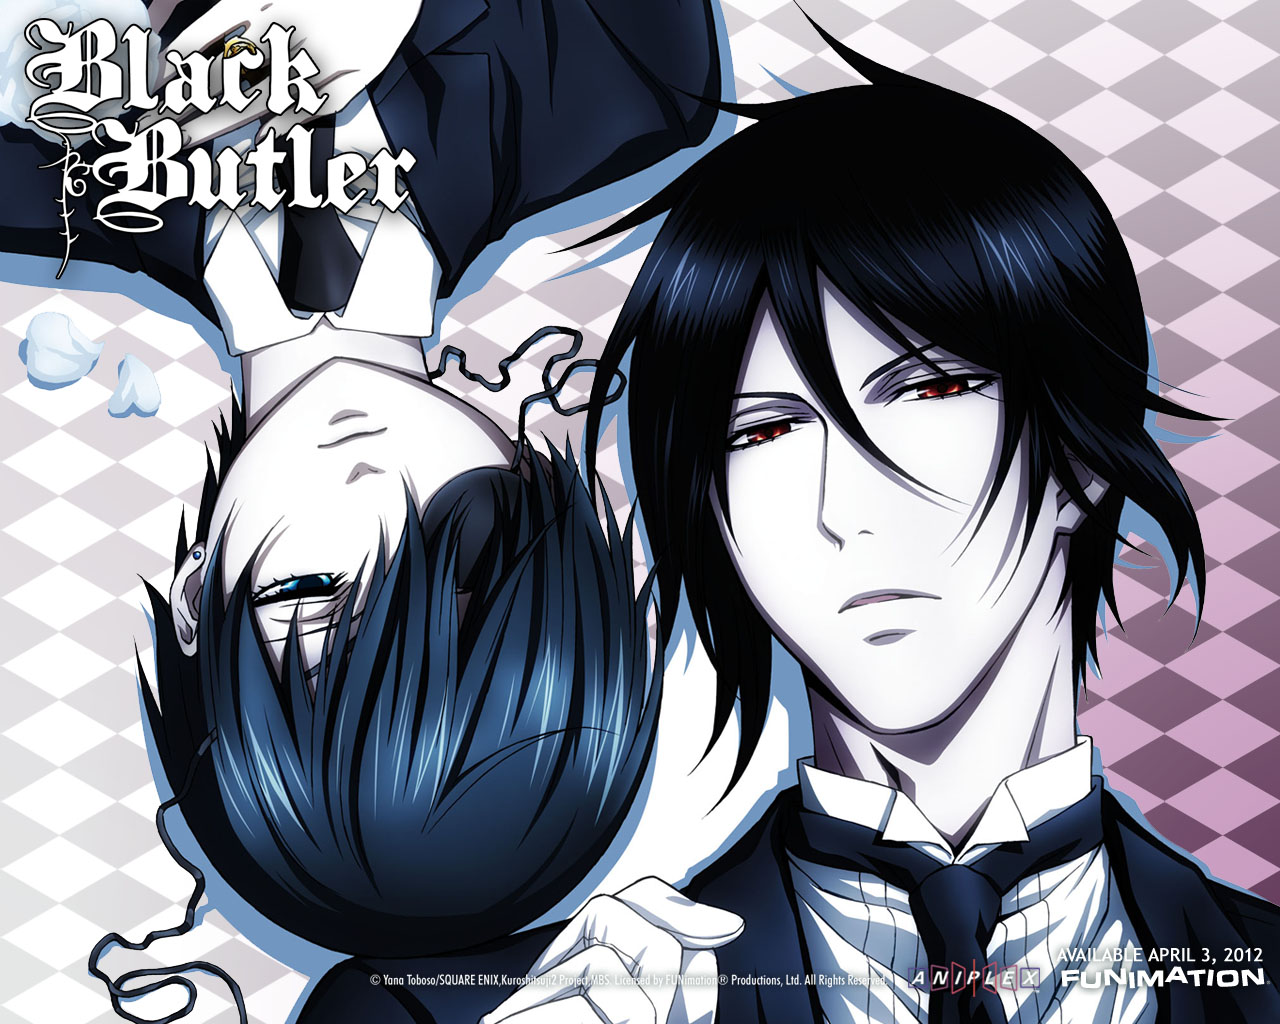 Black Butler Official Sebastian and Ciel Wallpaper Its the gift 1280x1024